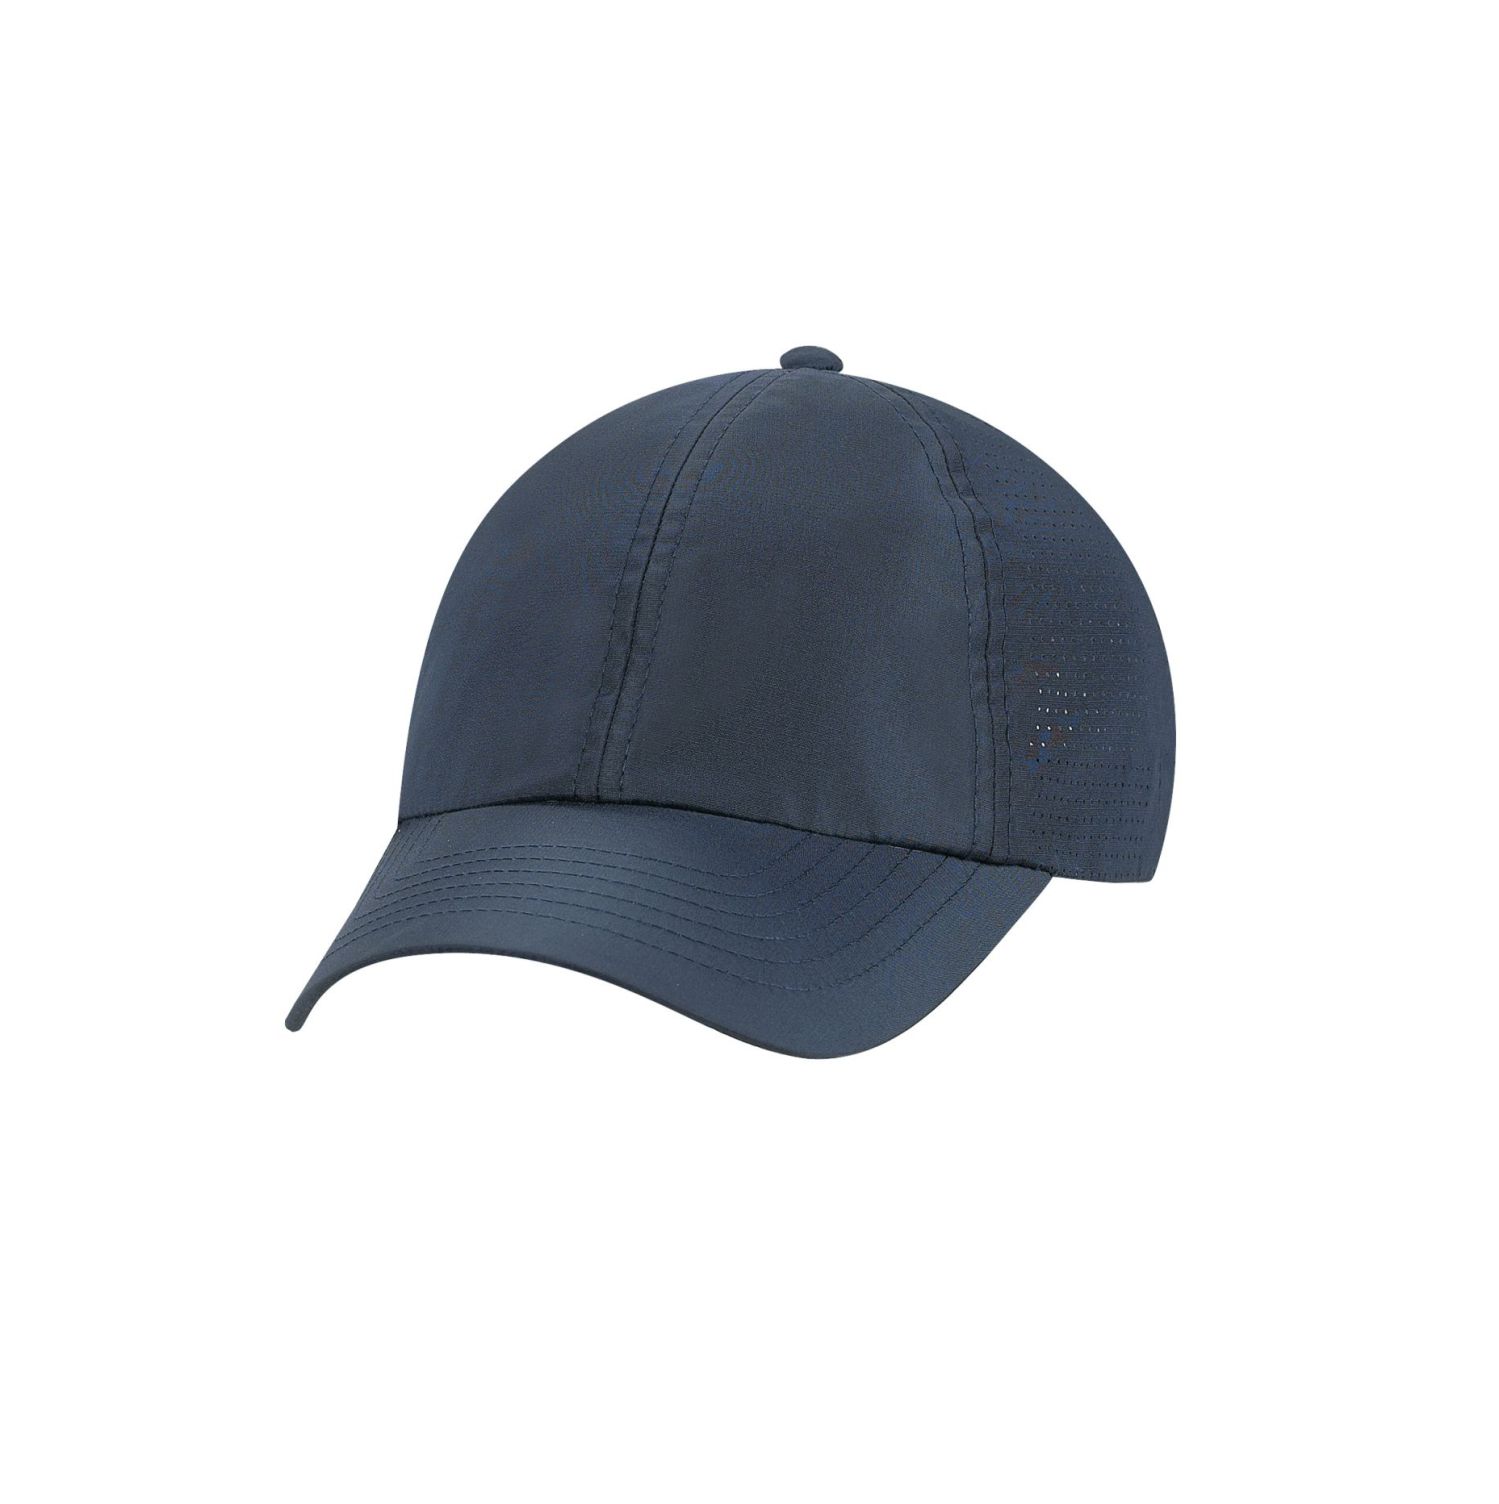 AJM Polyester Rip Stop / Polyester Rip Stop Mesh 6 Panel Contour Hat (Mesh Back) #1B090M Navy